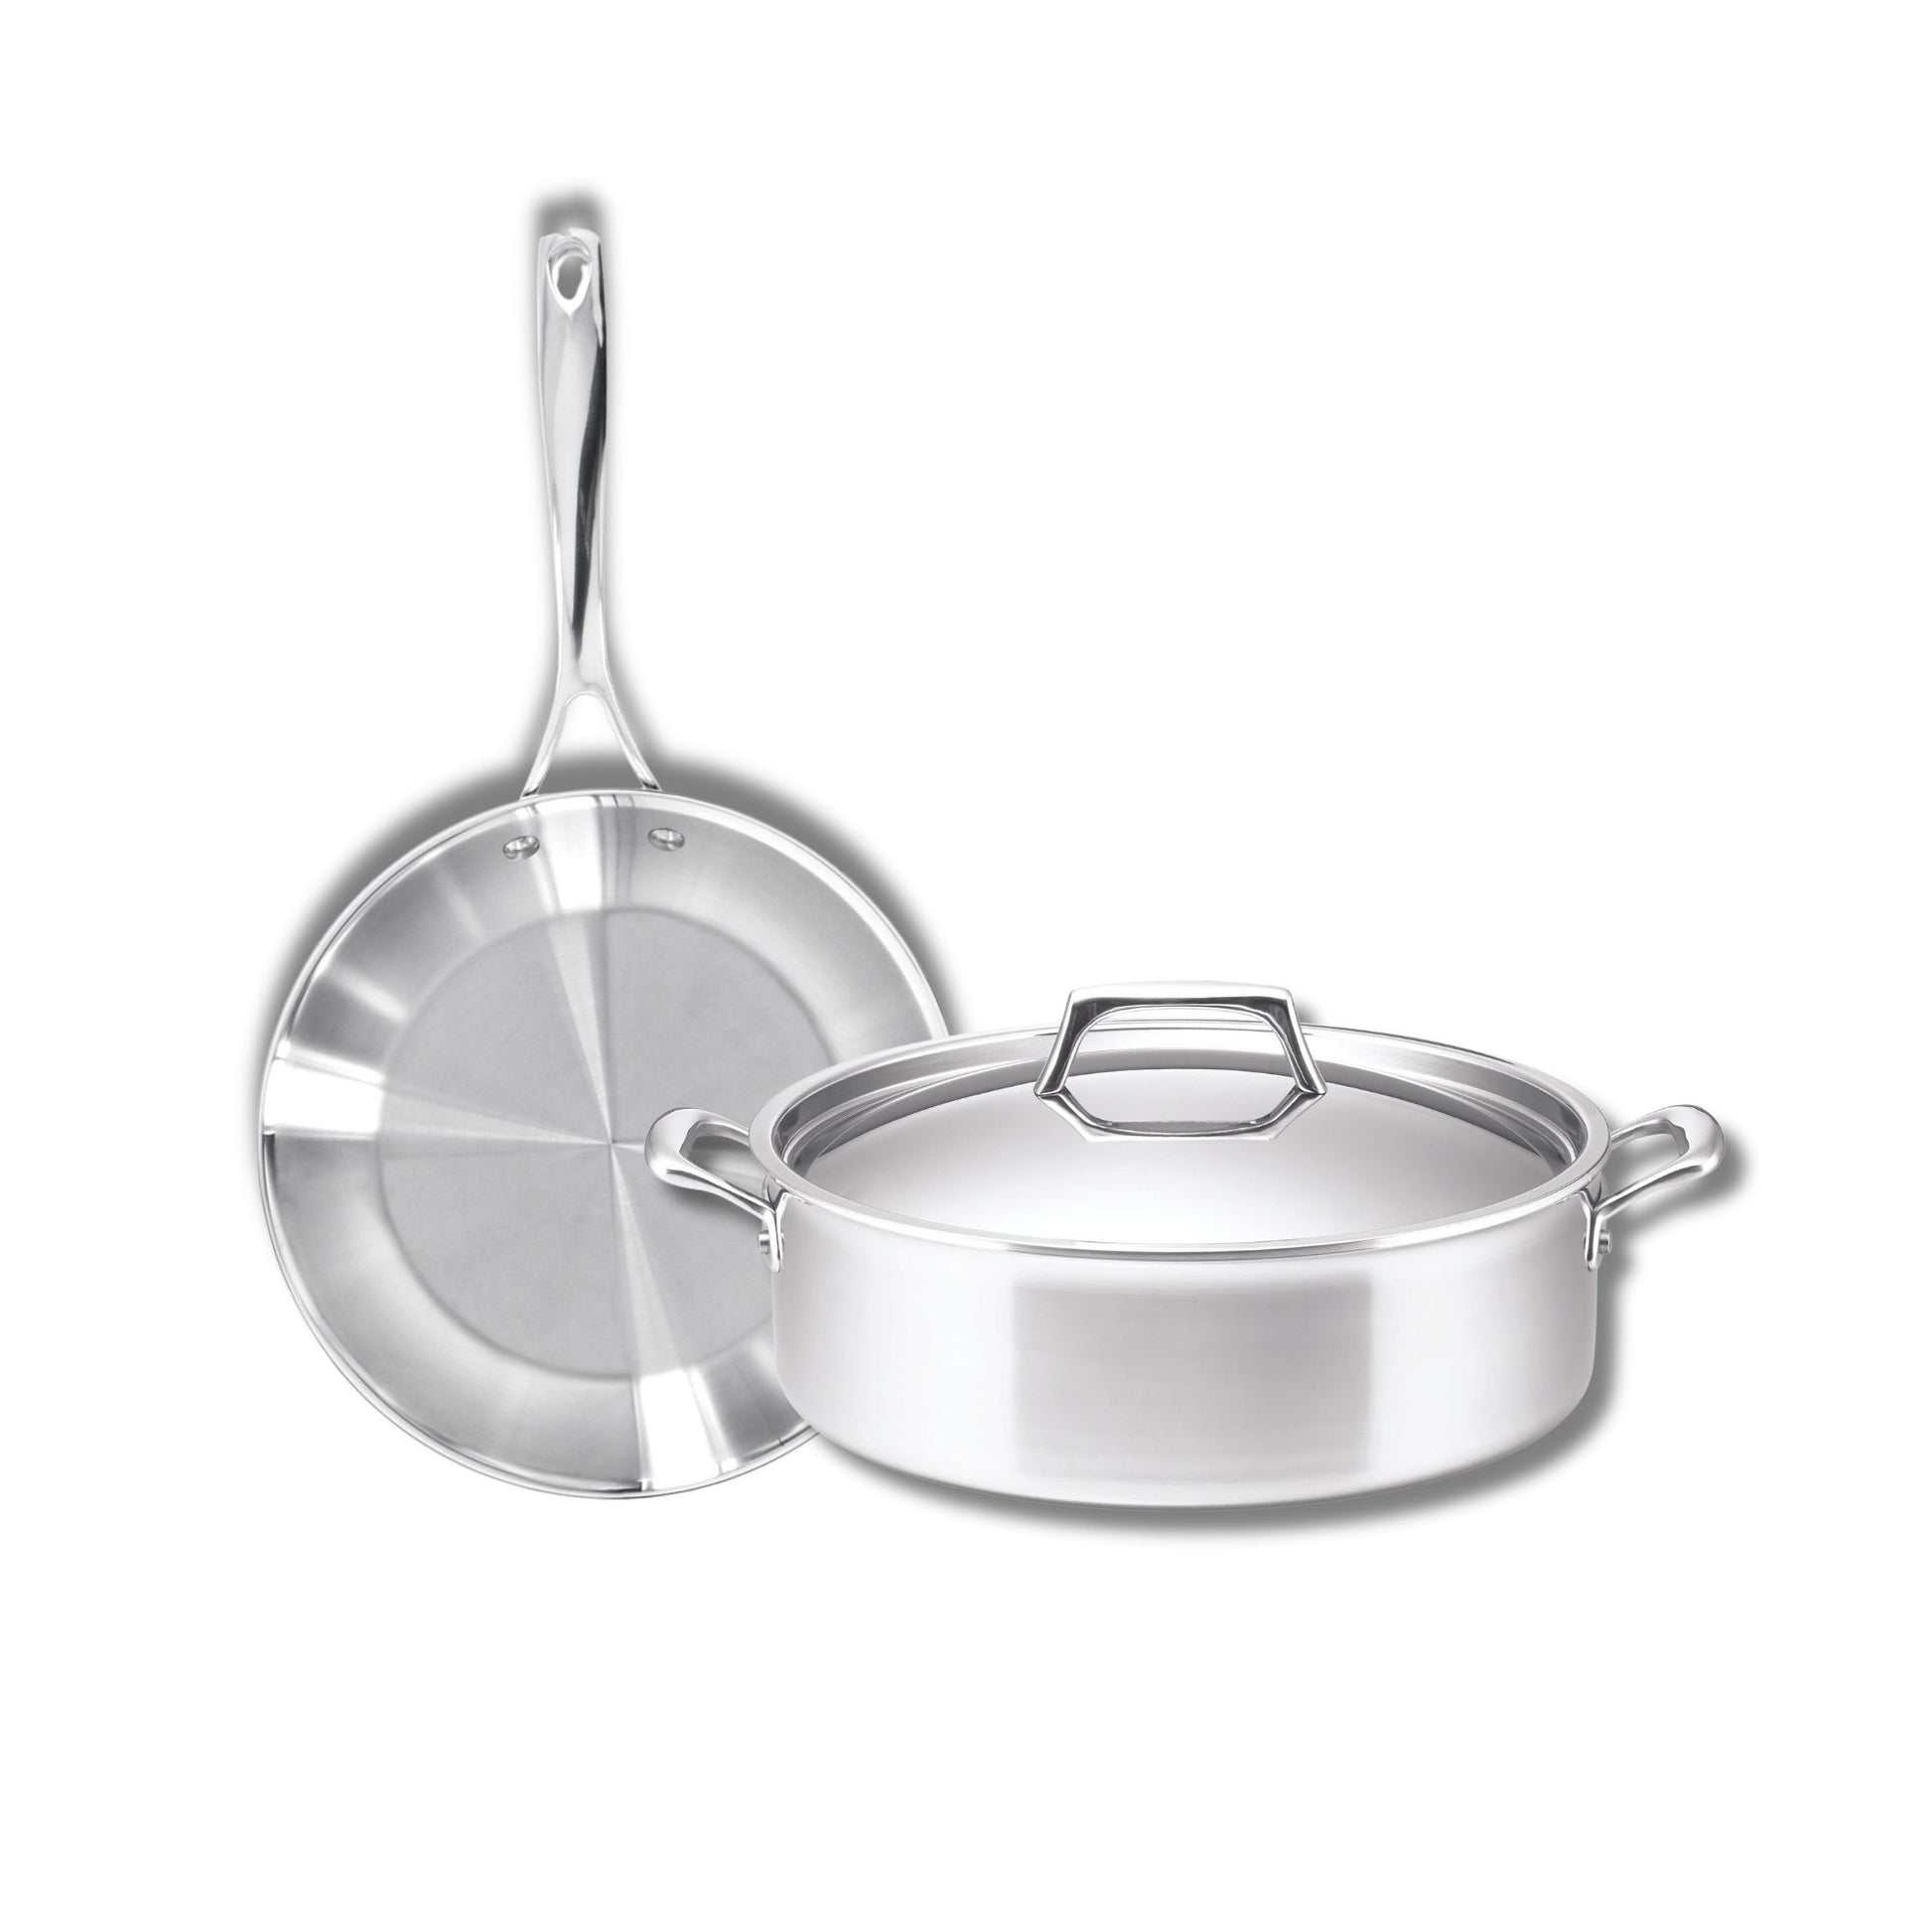 Essteele Per Sempre Risotto Pan, 2.3 Liter Capacity, 26 cm Size Silver:  Saucepans